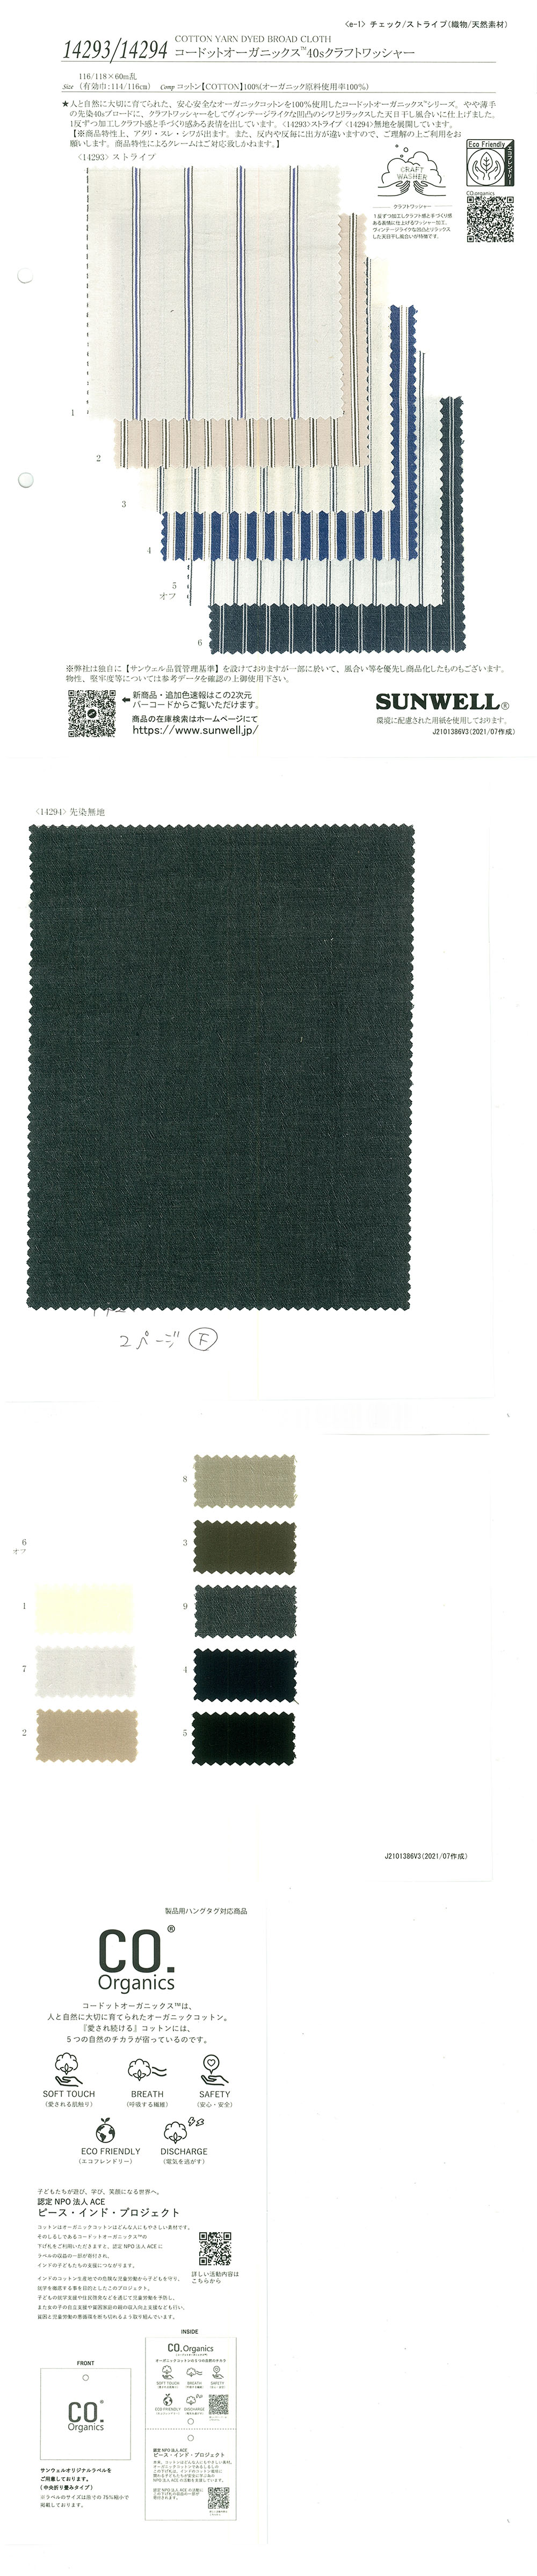 14293 Cordot Organics (R) 40 Einzelfaden-Handwerksstreifen[Textilgewebe] SUNWELL